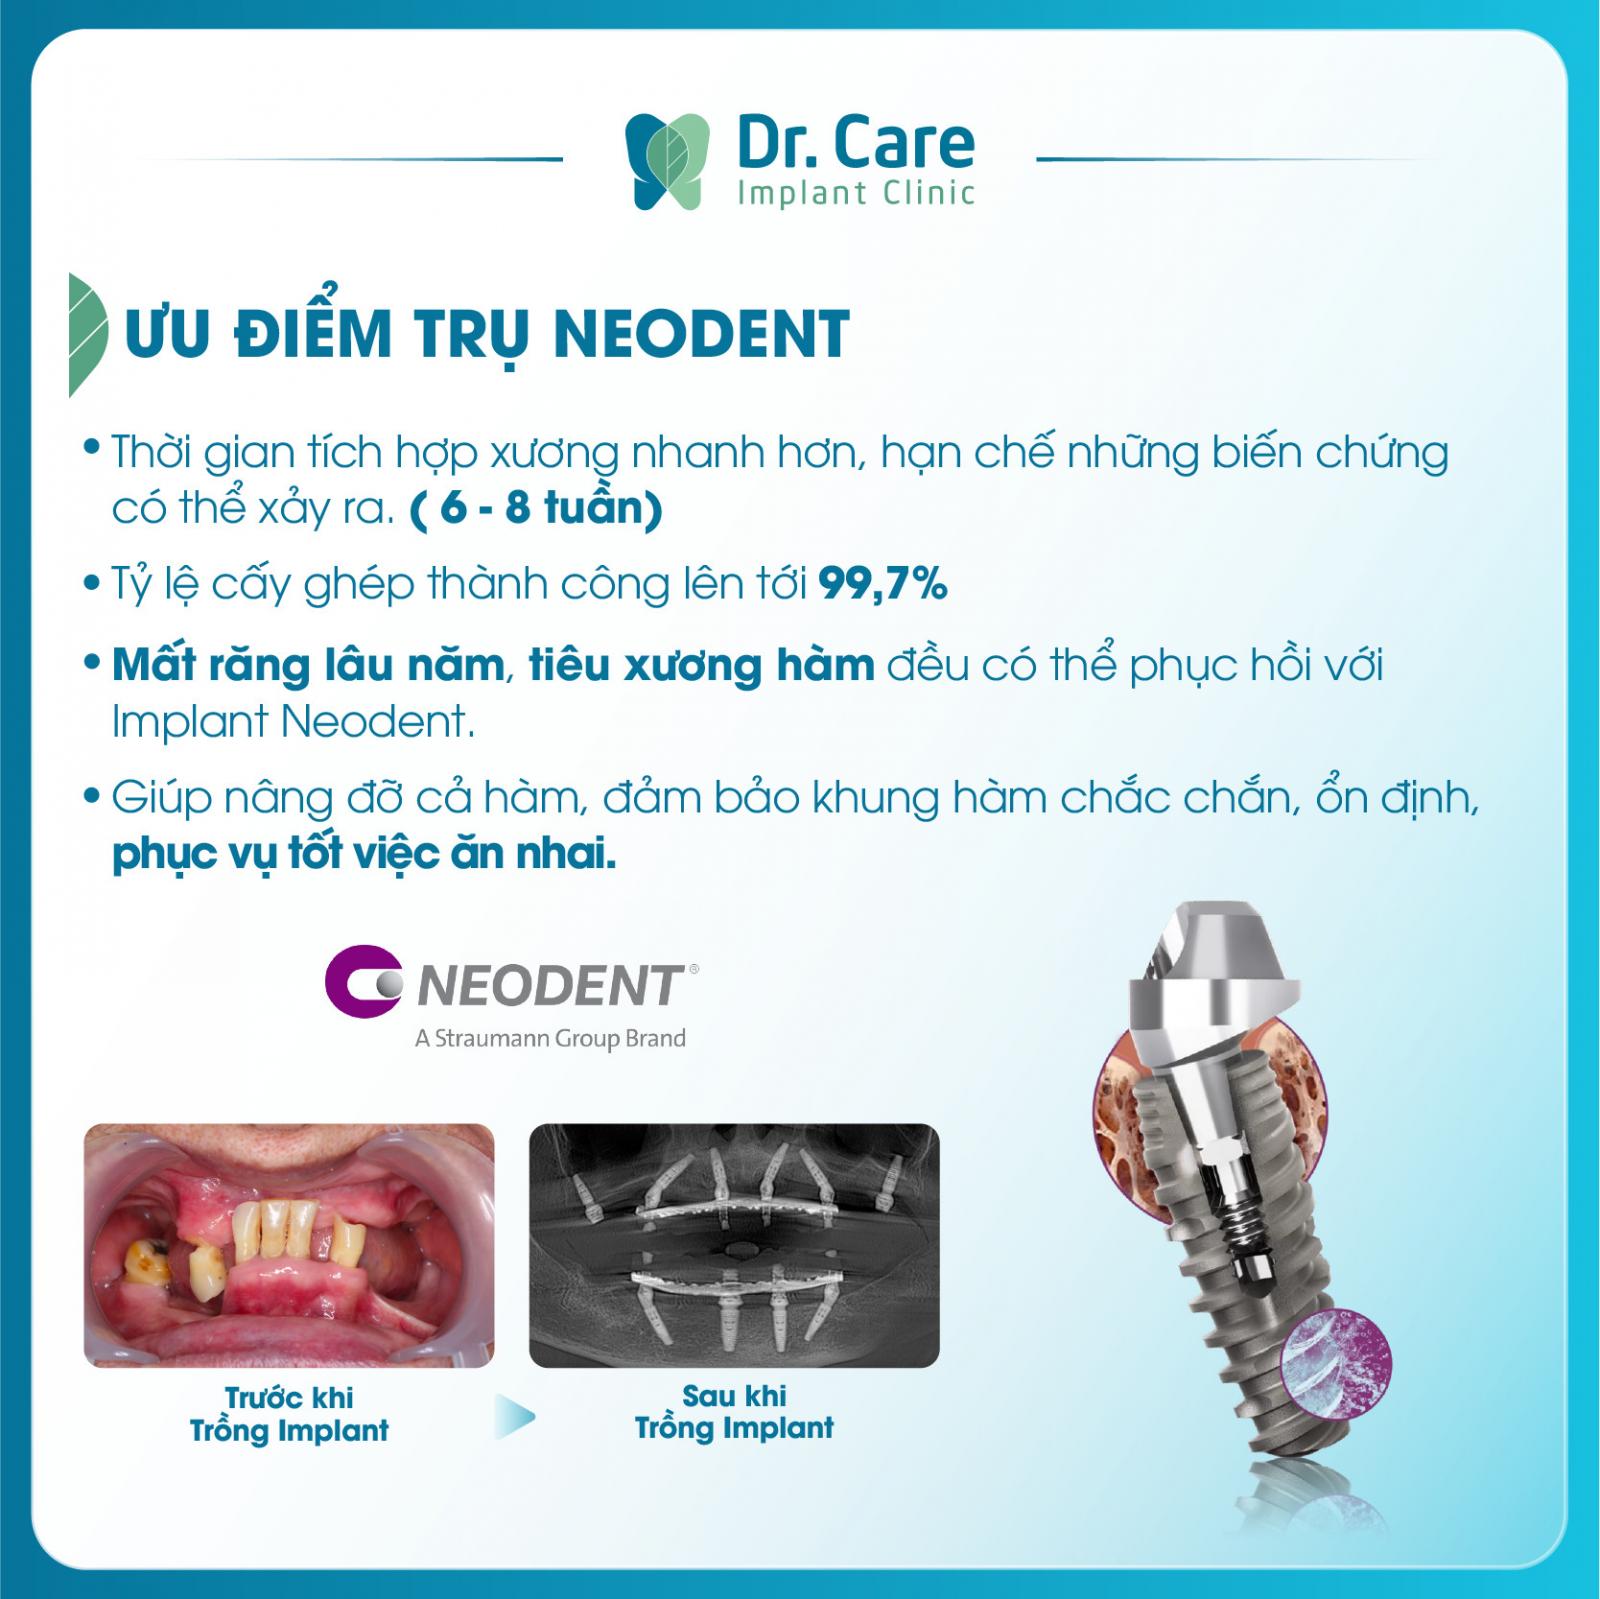 Trụ implant thuỵ sĩ Neodent